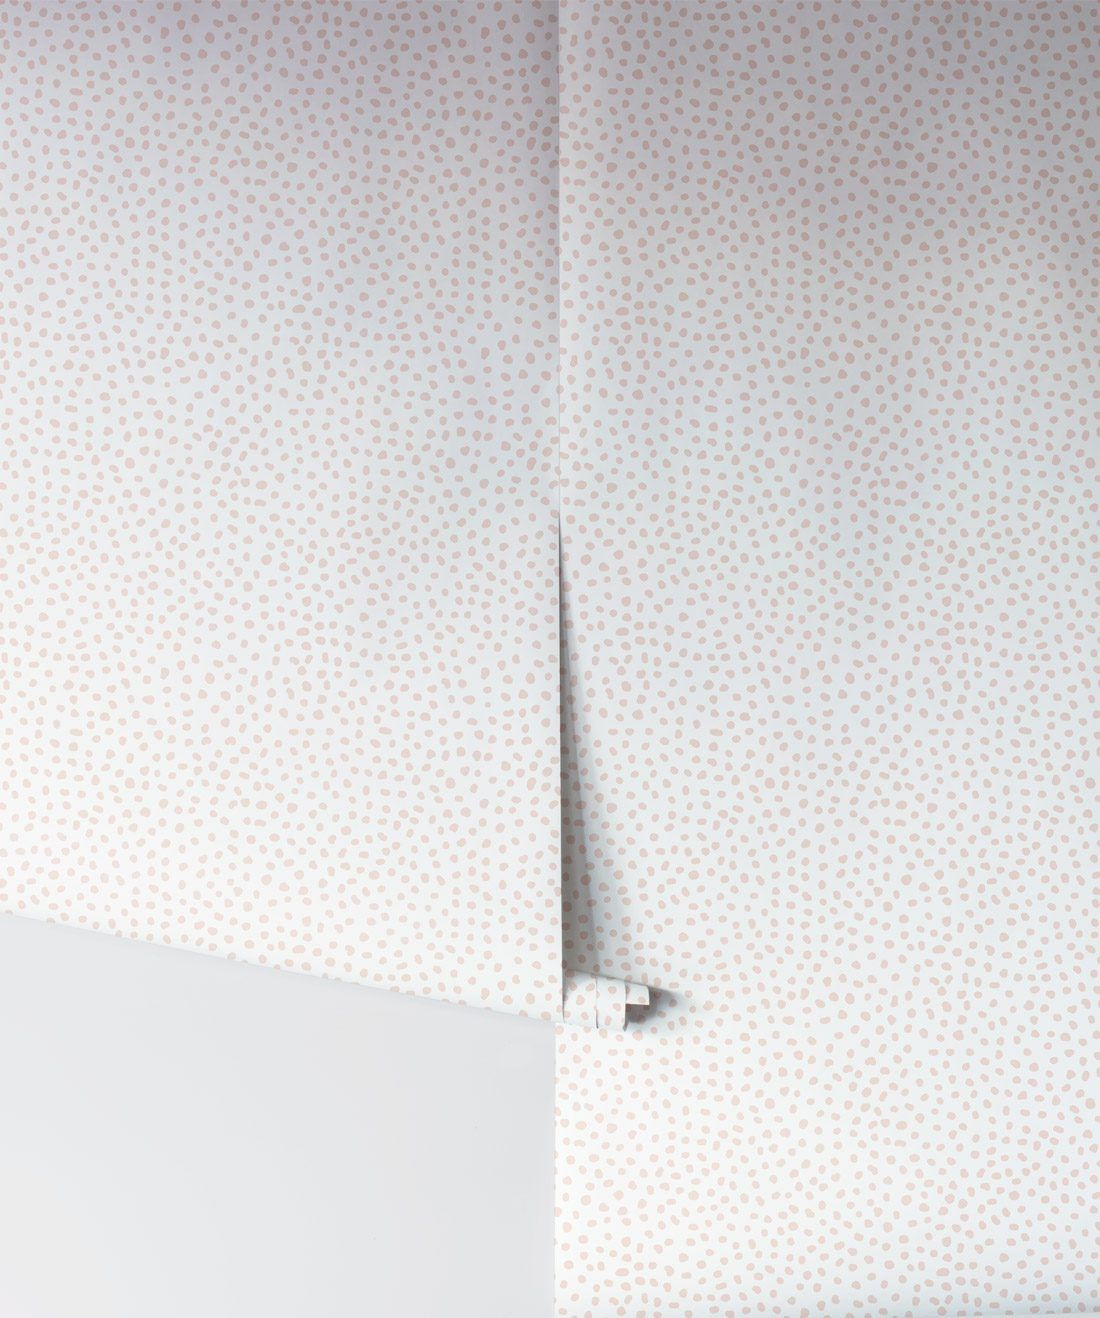 Huddy's Dots • Ella Rose • Spotted Wallpaper • Roll